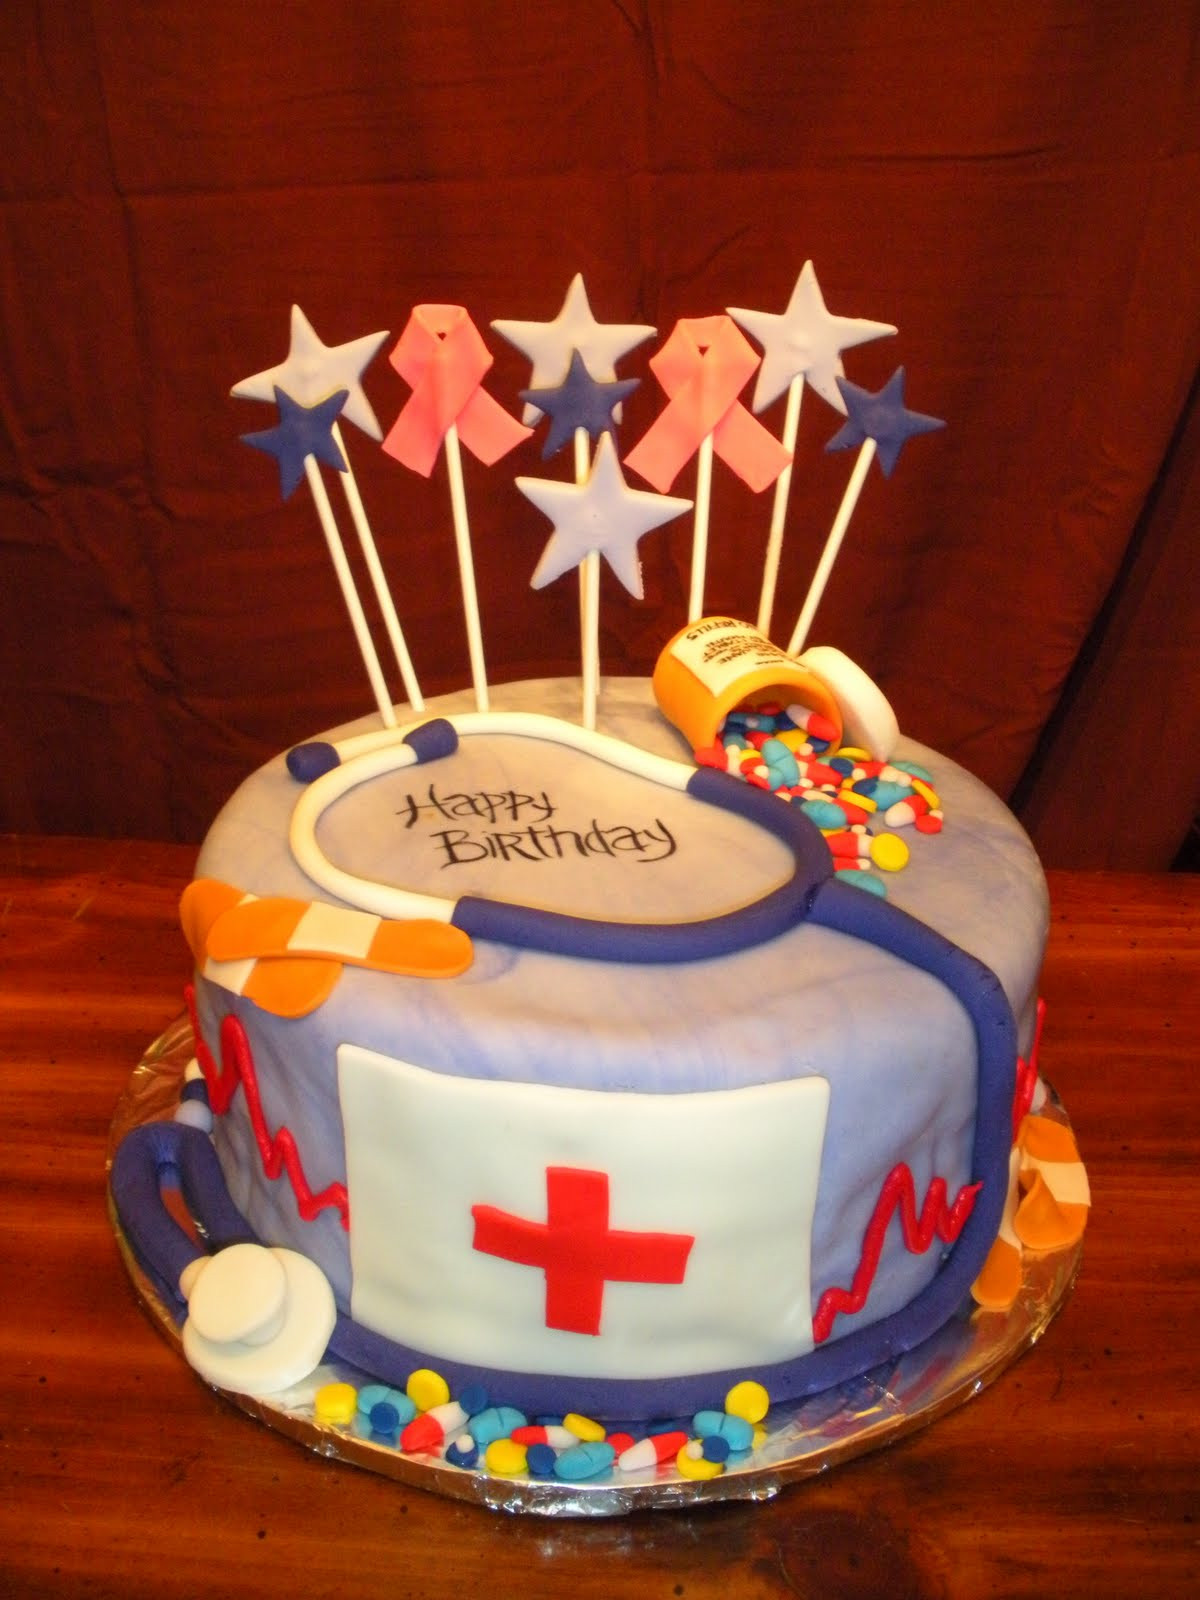 Best ideas about Nurse Birthday Cake
. Save or Pin Beachy Cakes Nurse cake Now.